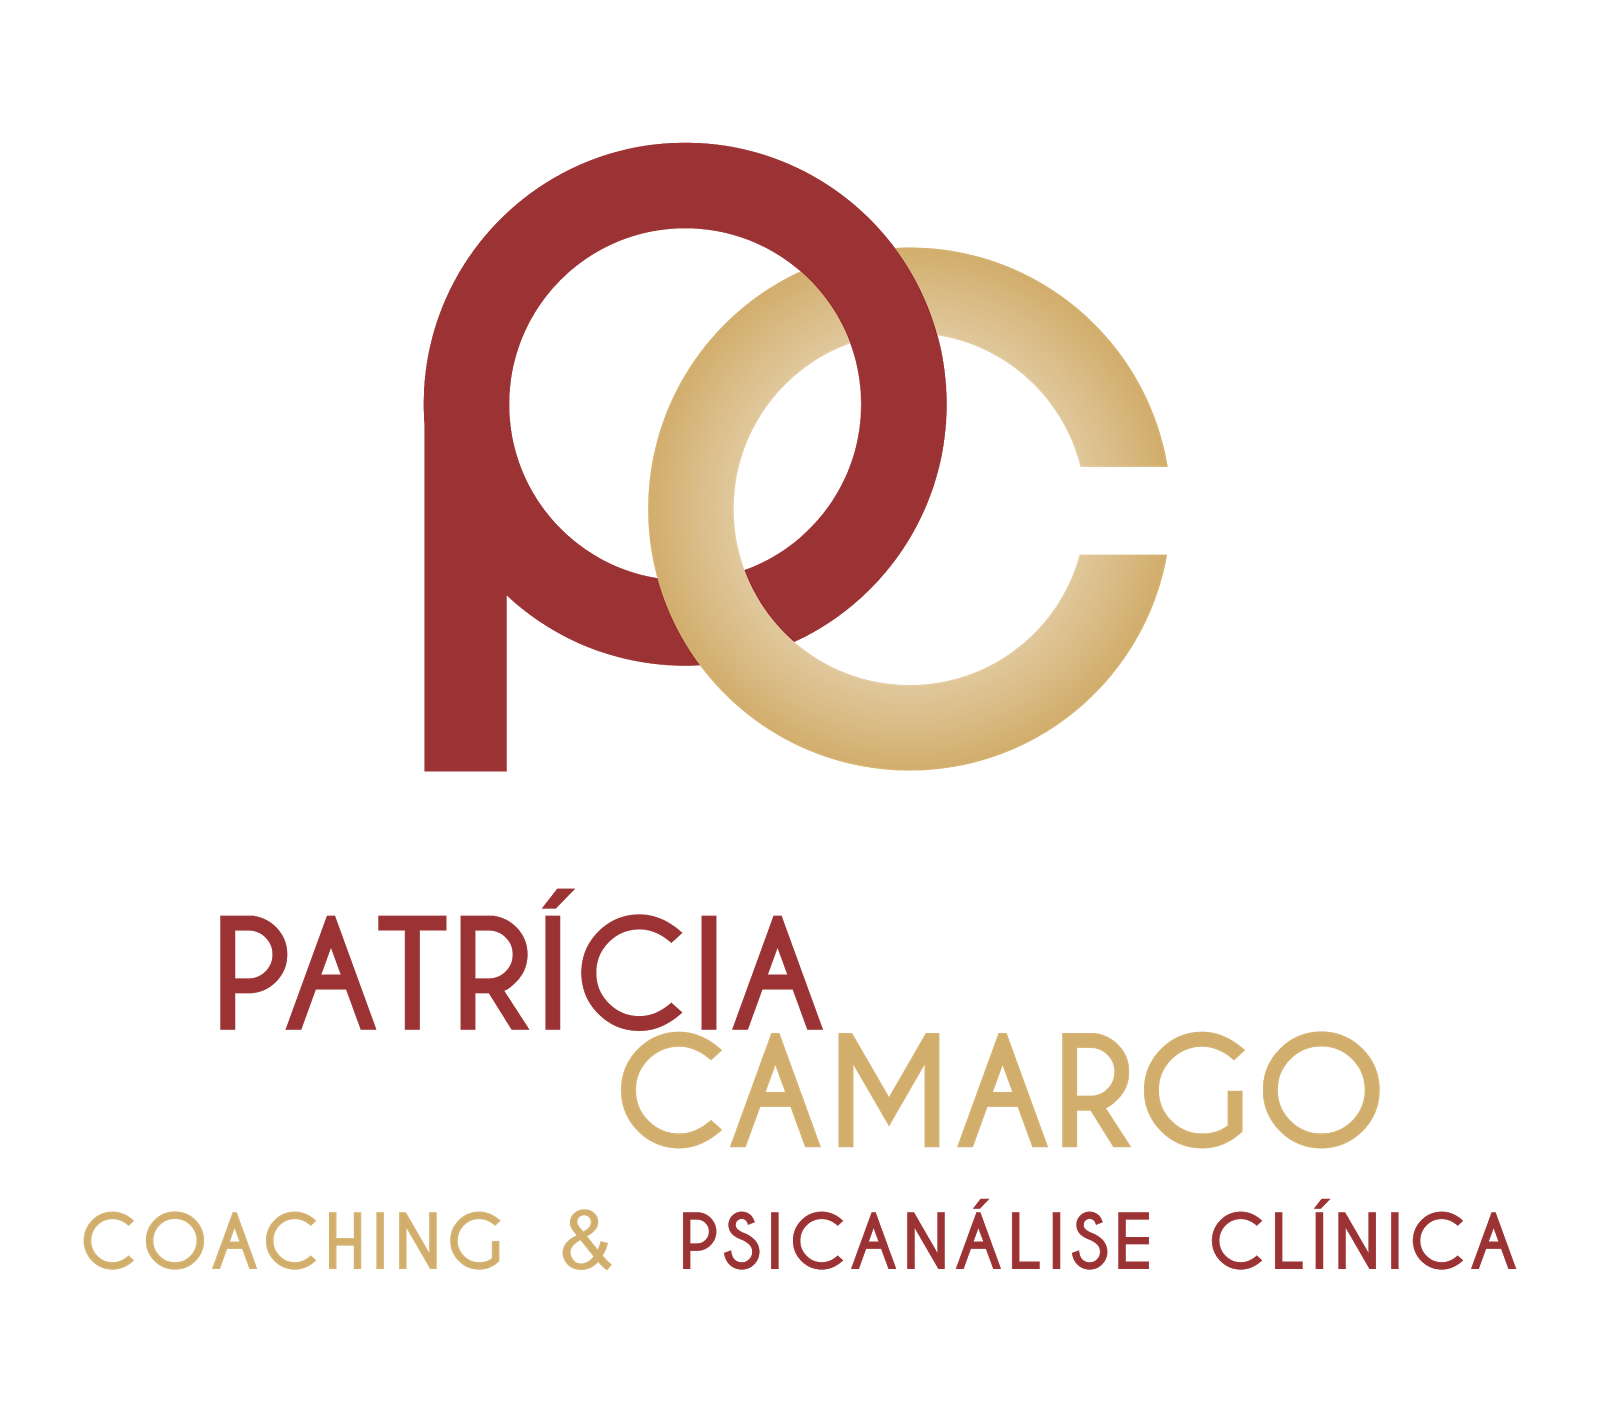 Patrícia Camargo - Coaching & Psicanálise Clínica